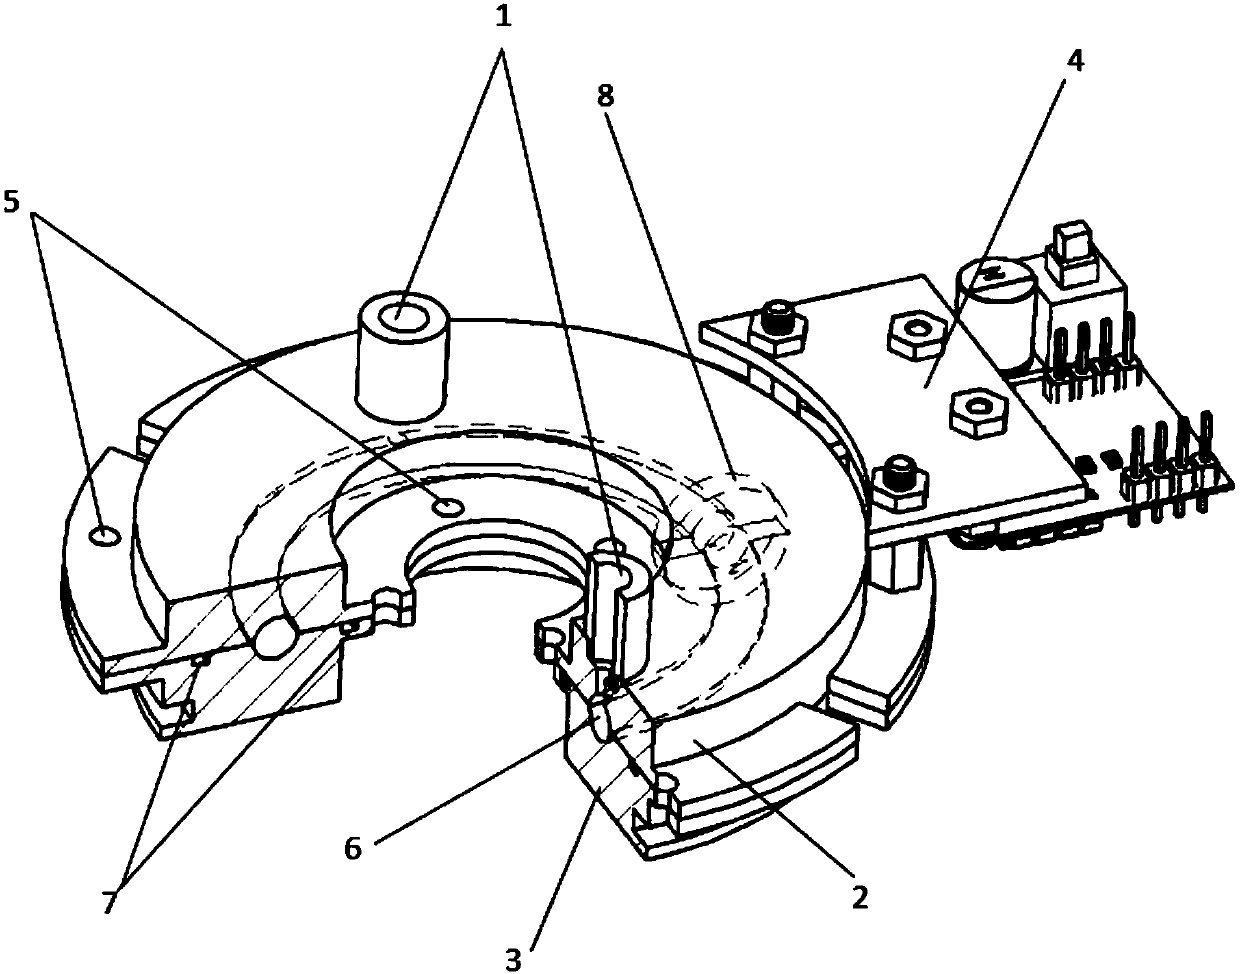 Design method of liquid ring angular accelerometer and modeling method of dynamic-pressure process